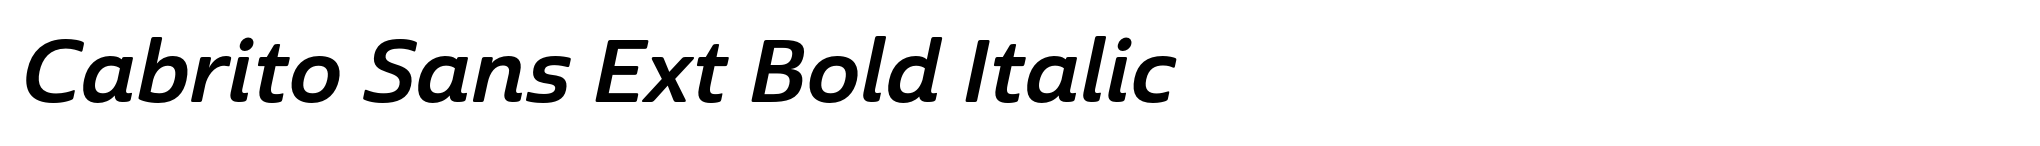 Cabrito Sans Ext Bold Italic image